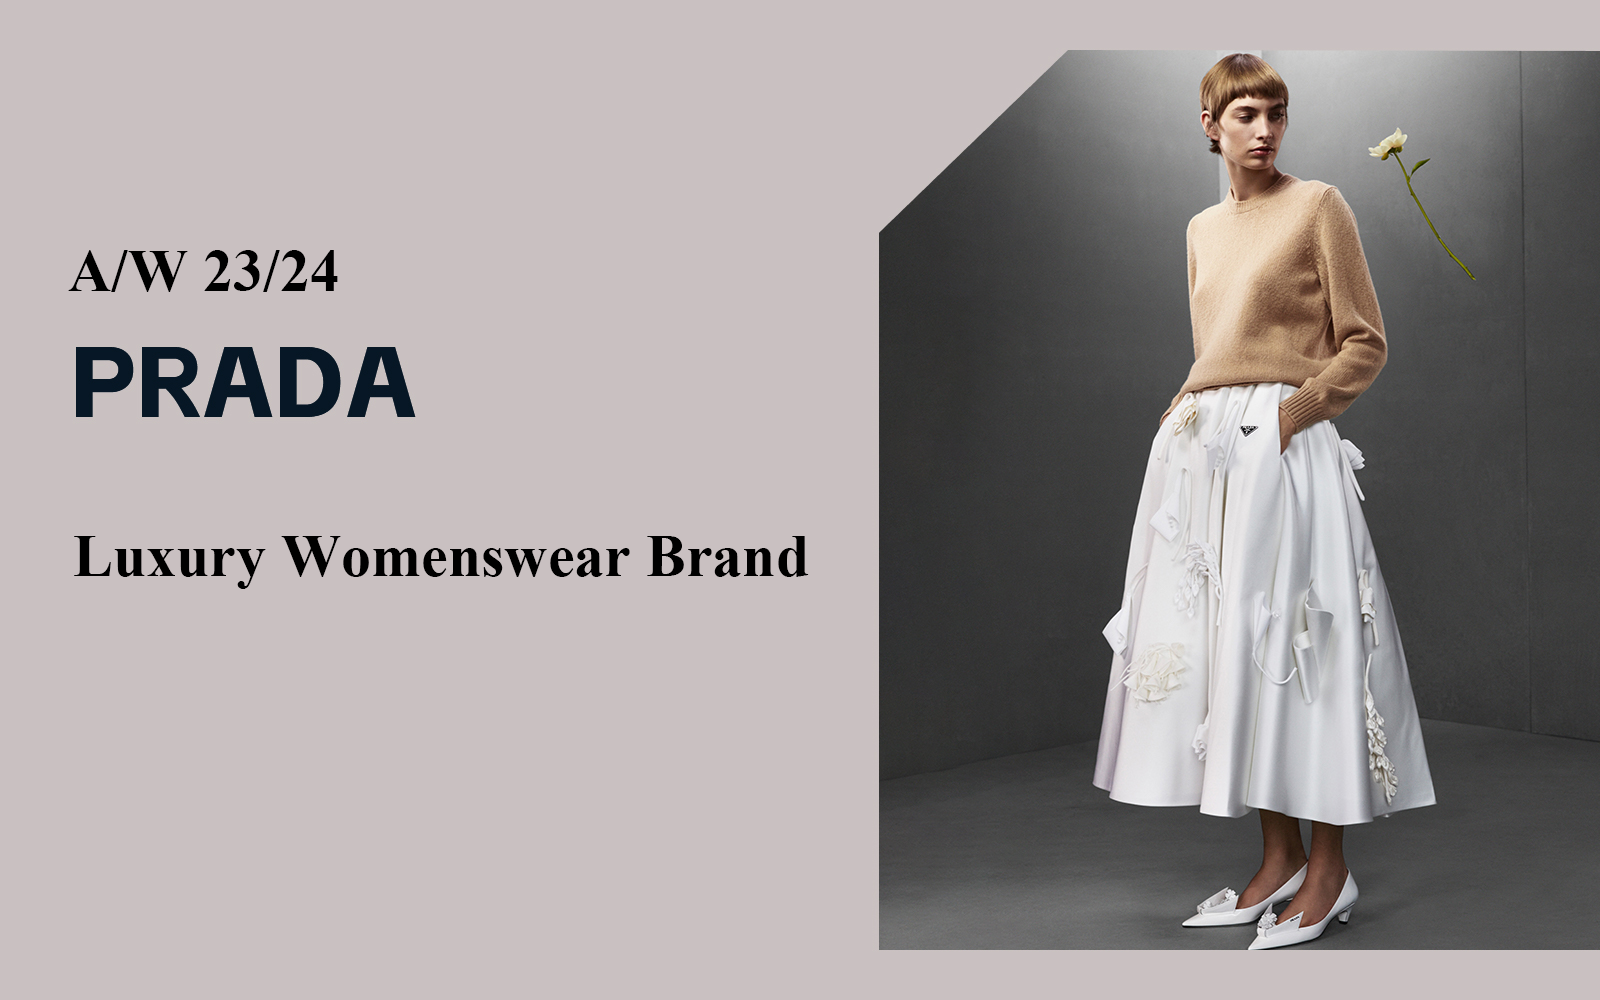 The Analysis of PRADA The Luxury Womenswear Brand